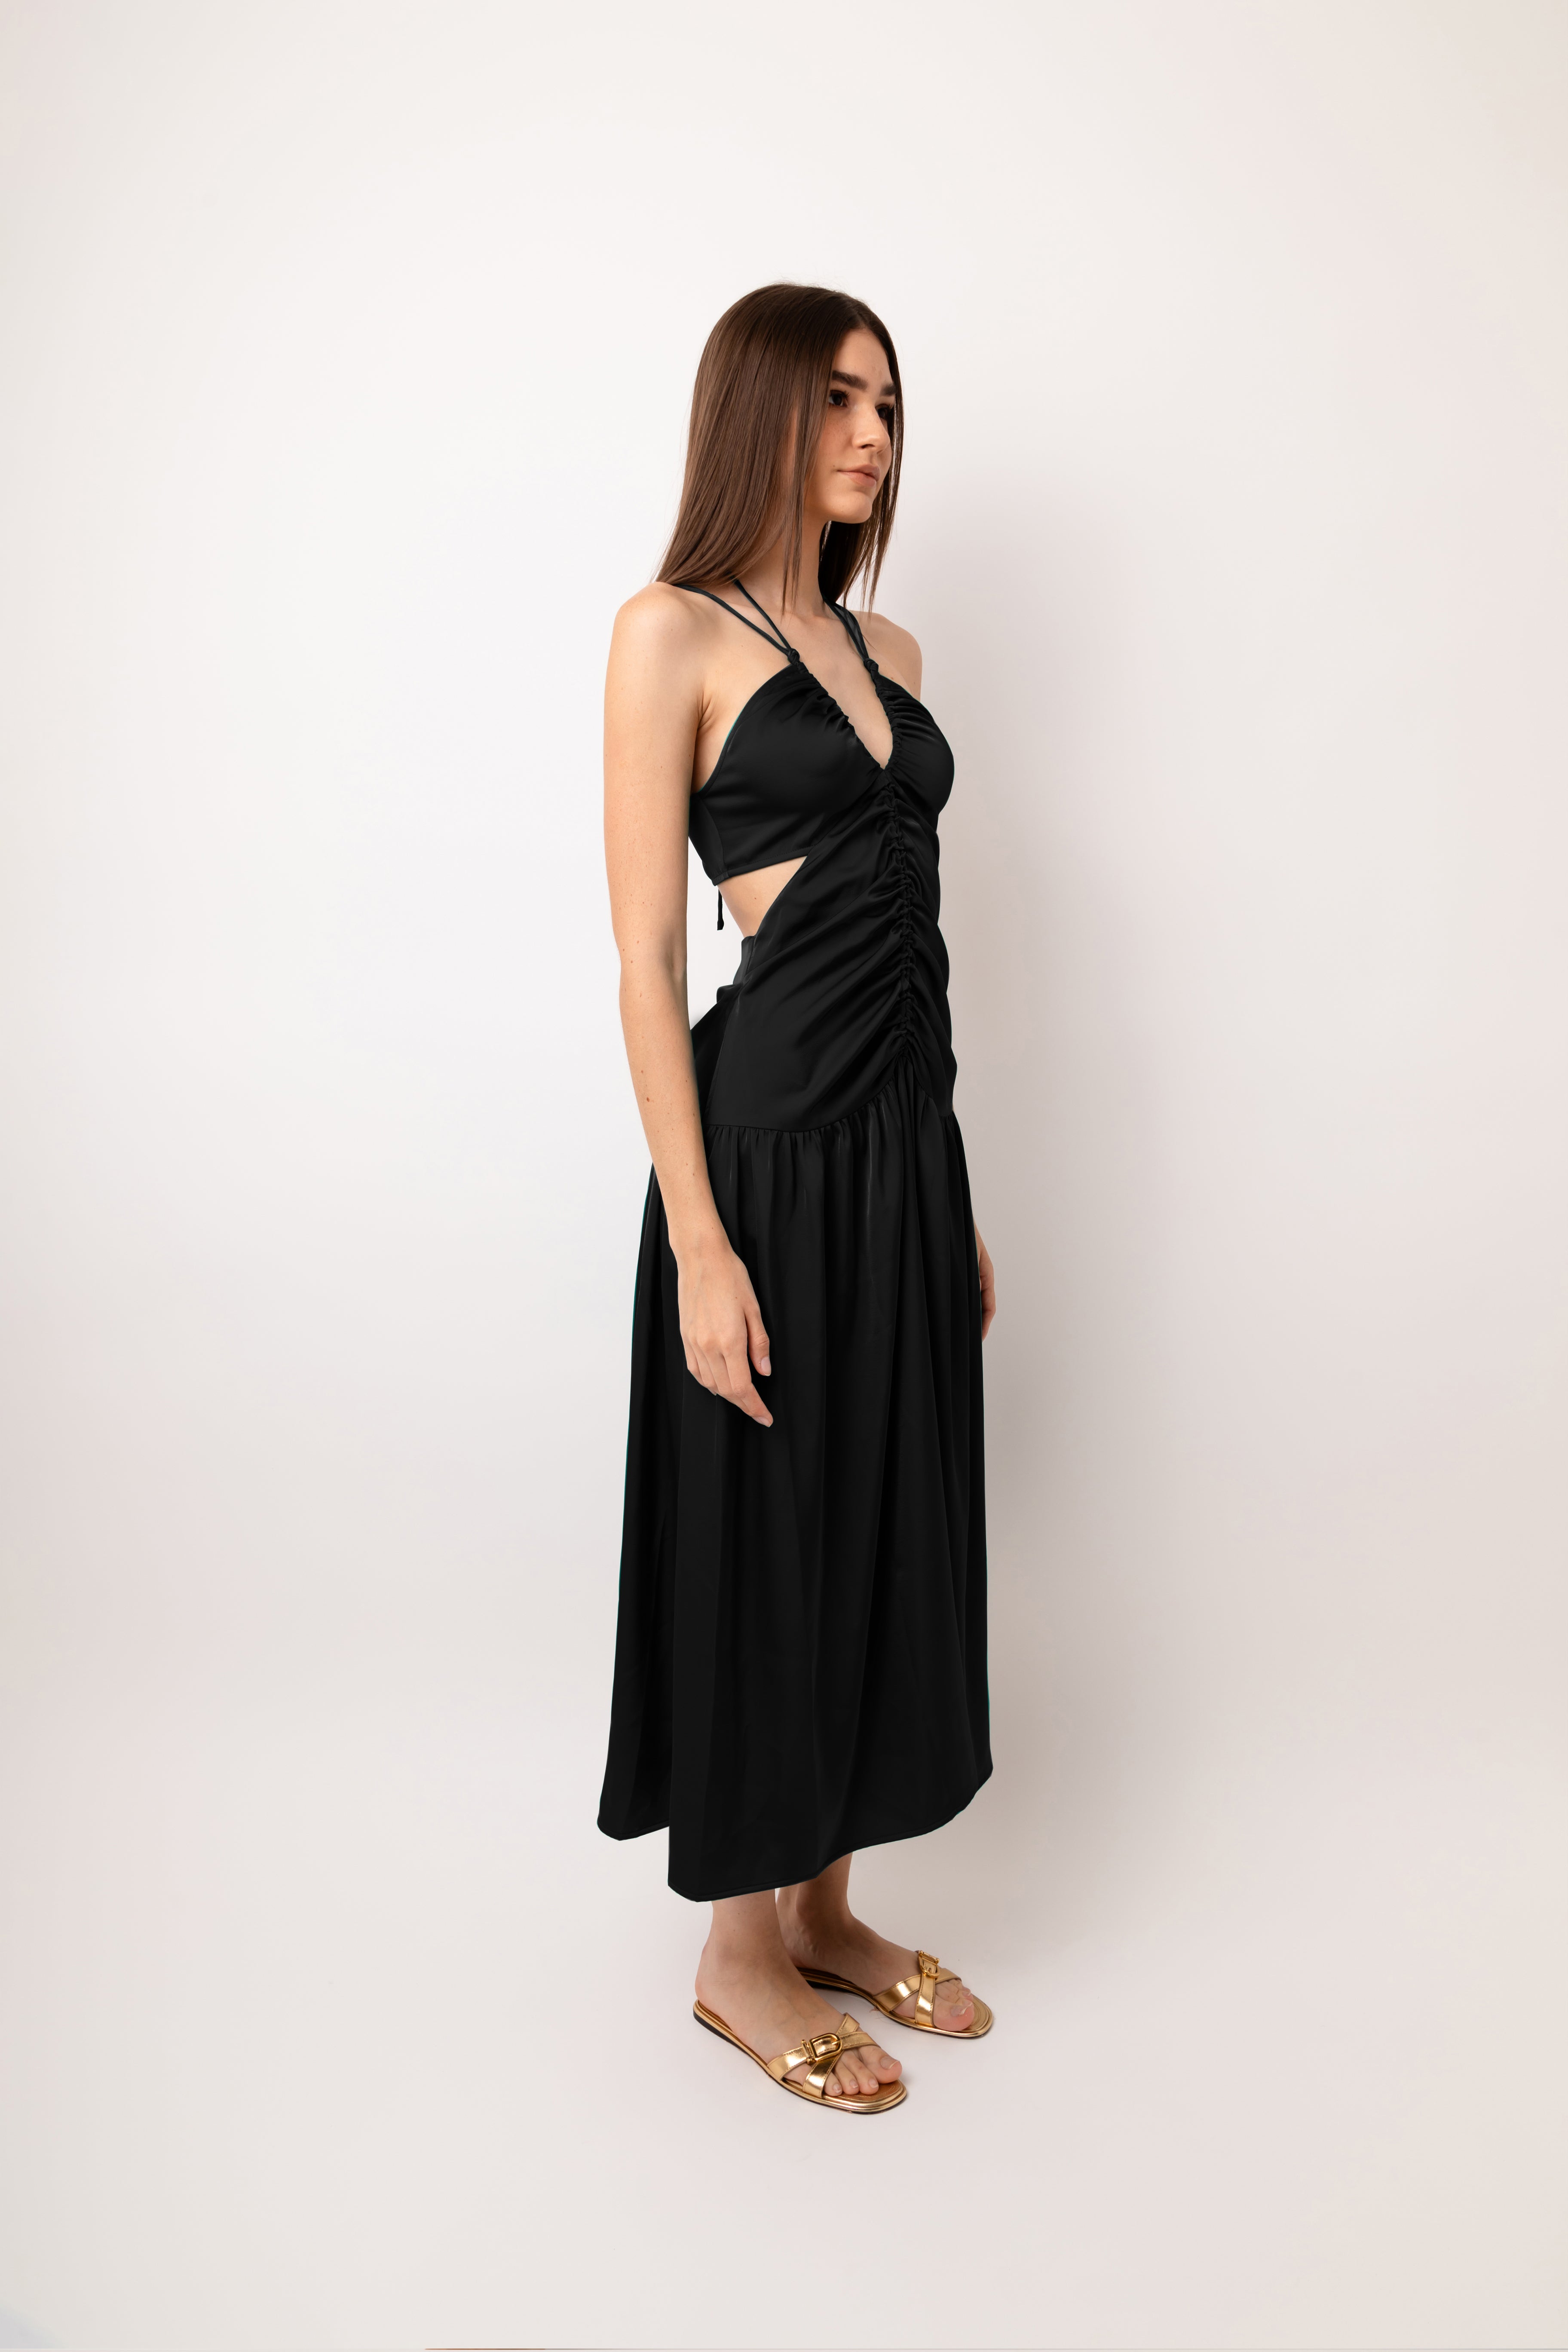 Freya Black Satin Ruched Midi Dress